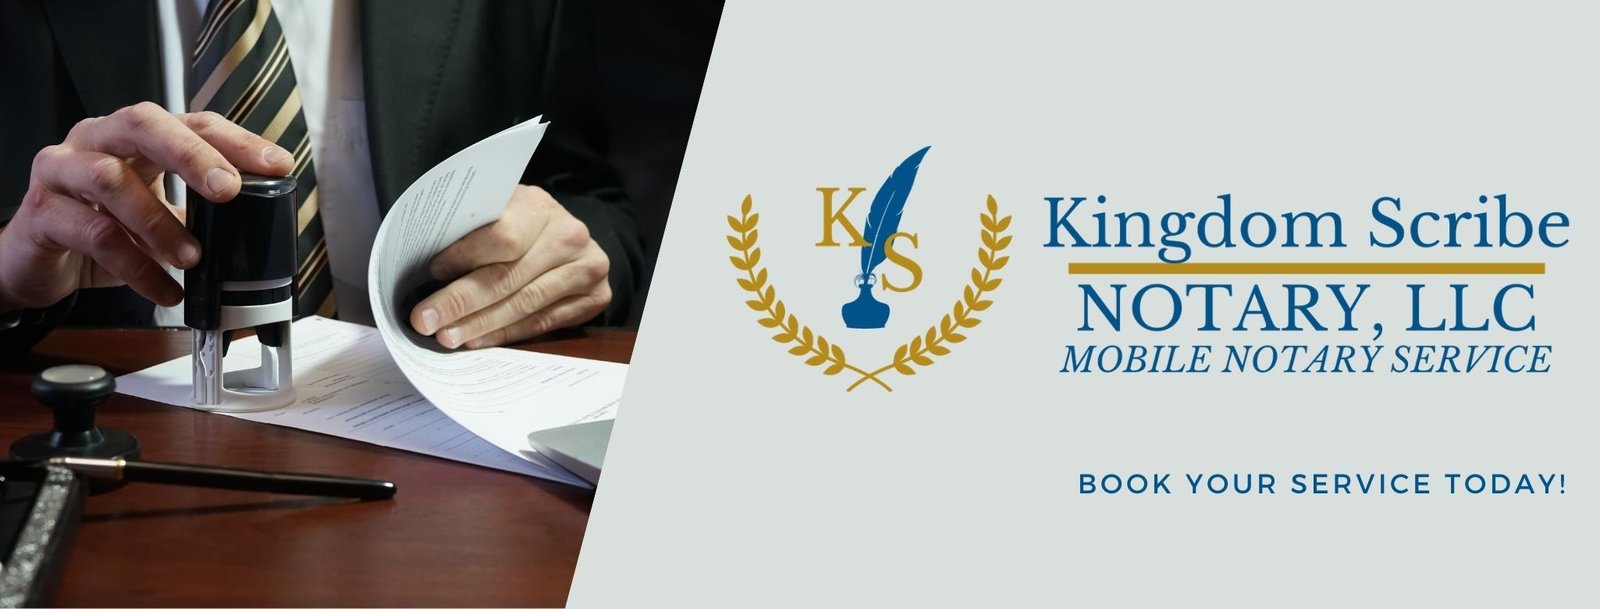 Kingdom Scribe Notary LLC